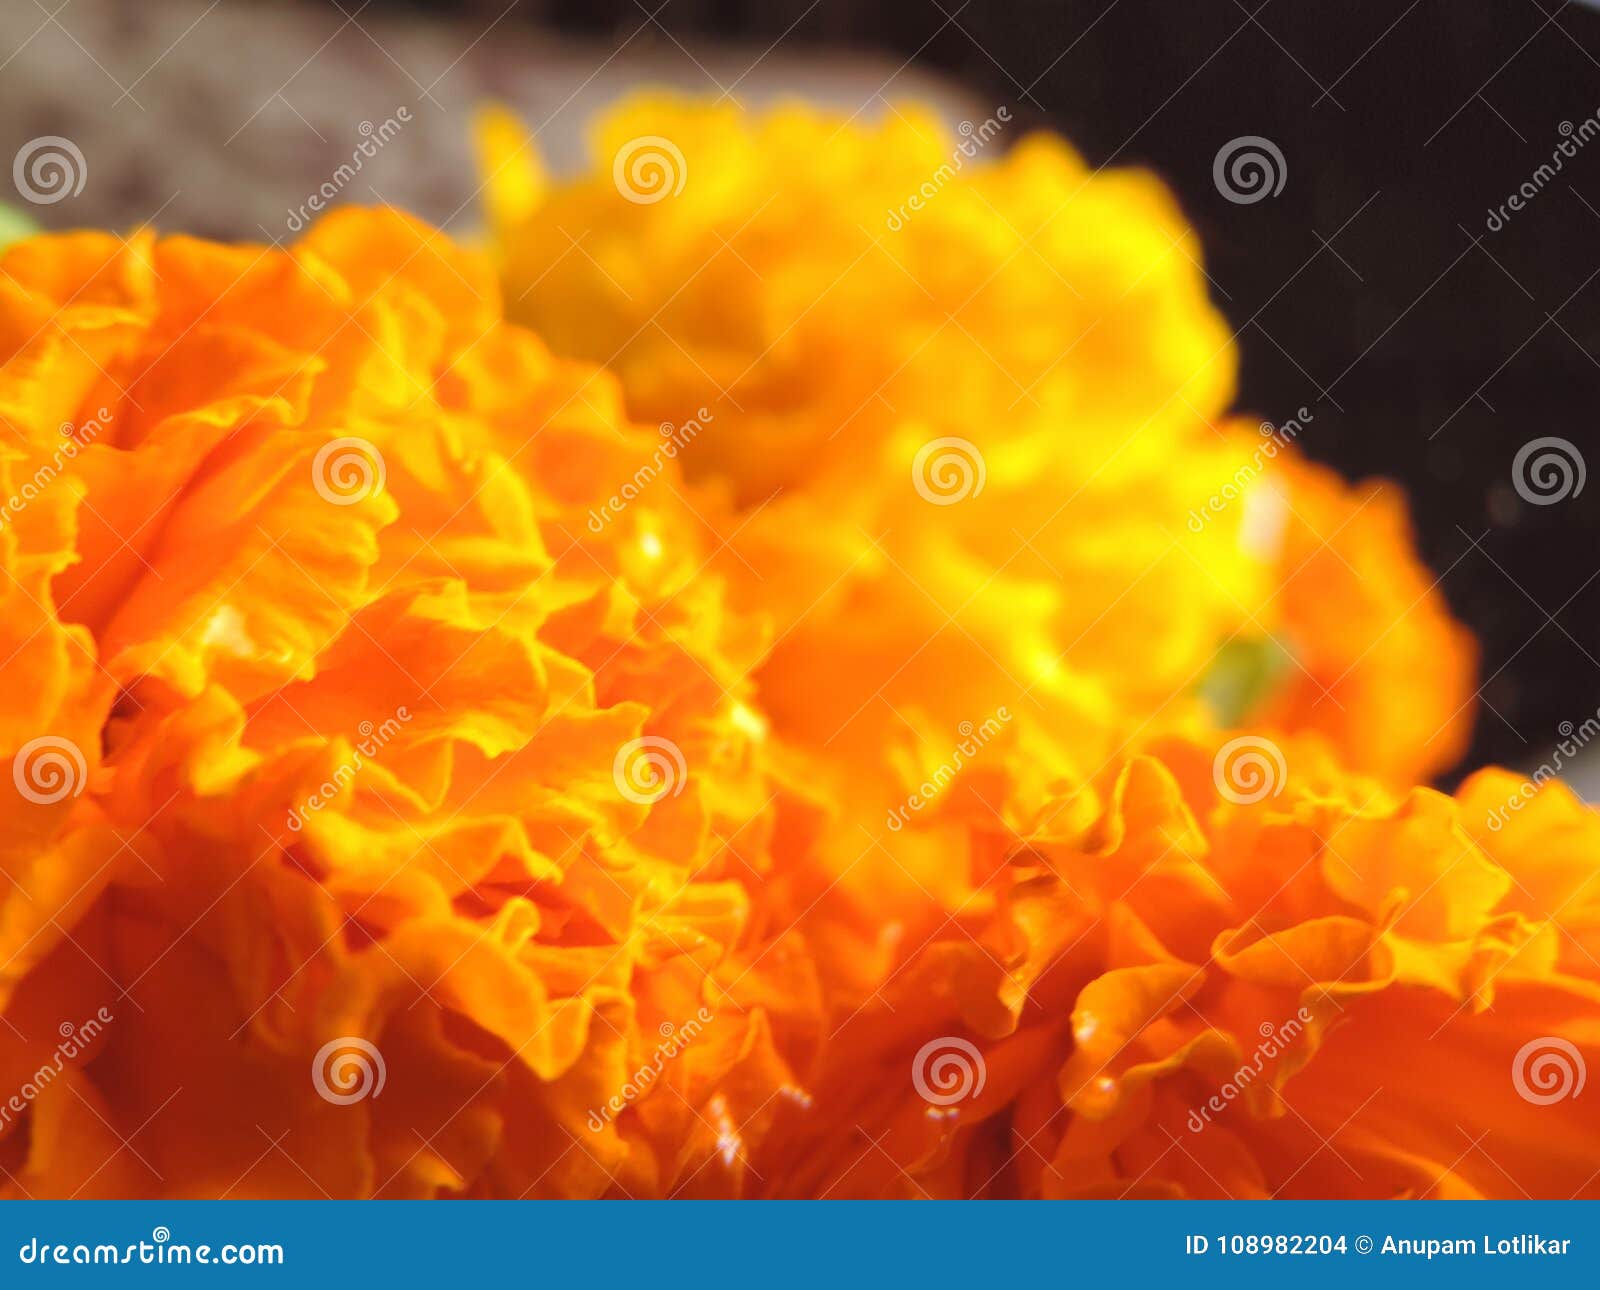 Orange Background Images  Free Download on Freepik